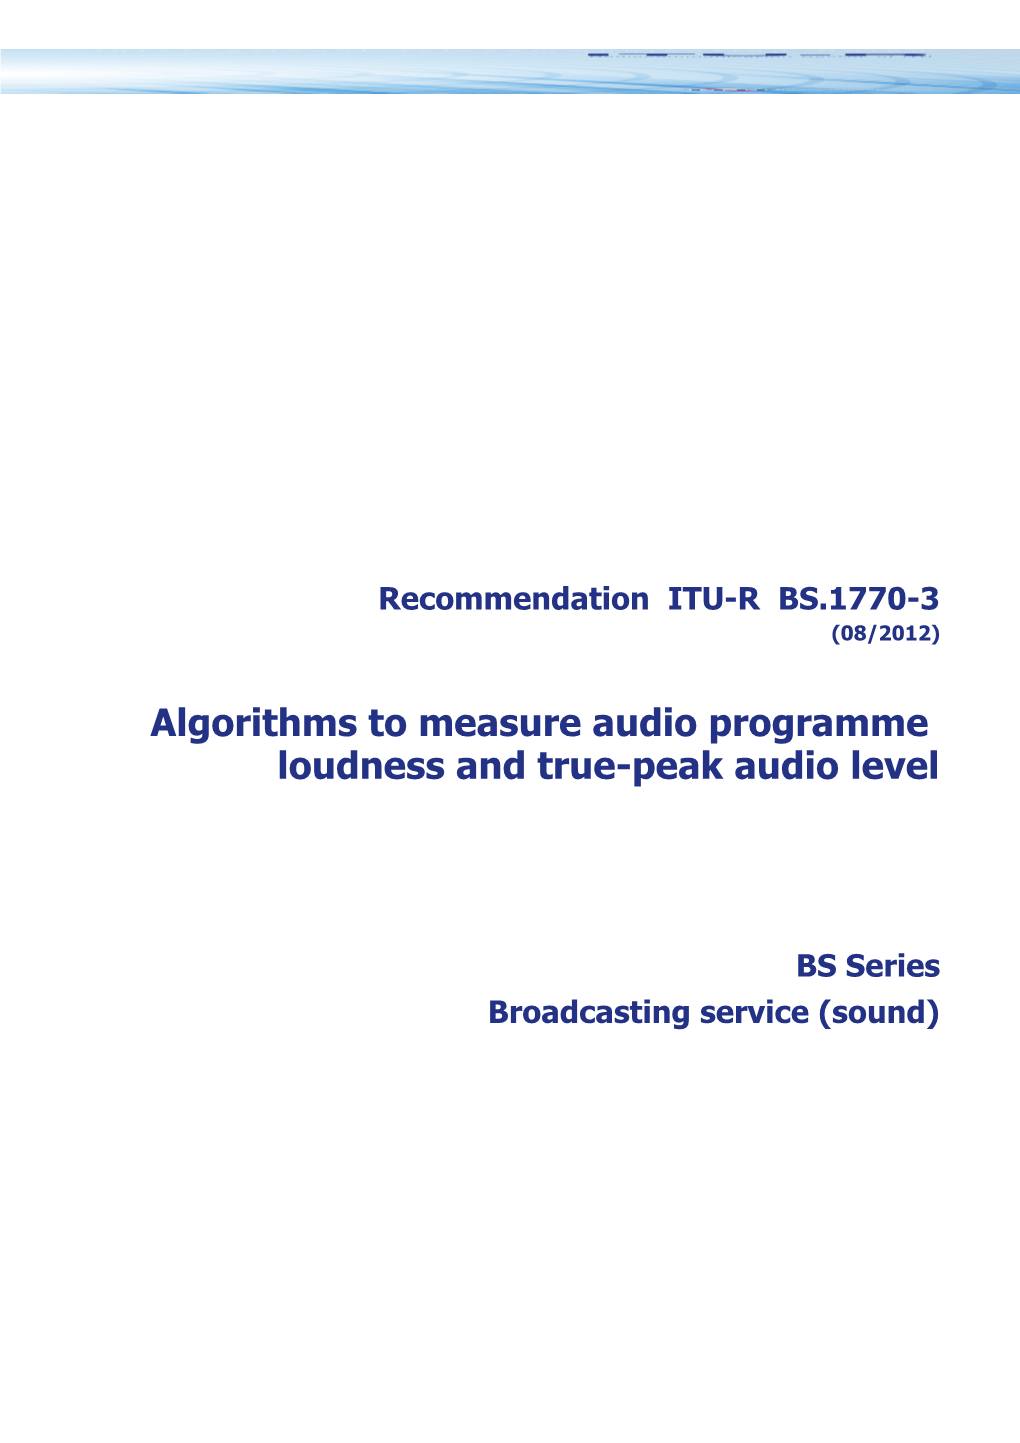 RECOMMENDATION ITU-R BS.1770-3* - Algorithms to Measure Audio Programme Loudness and True-Peak